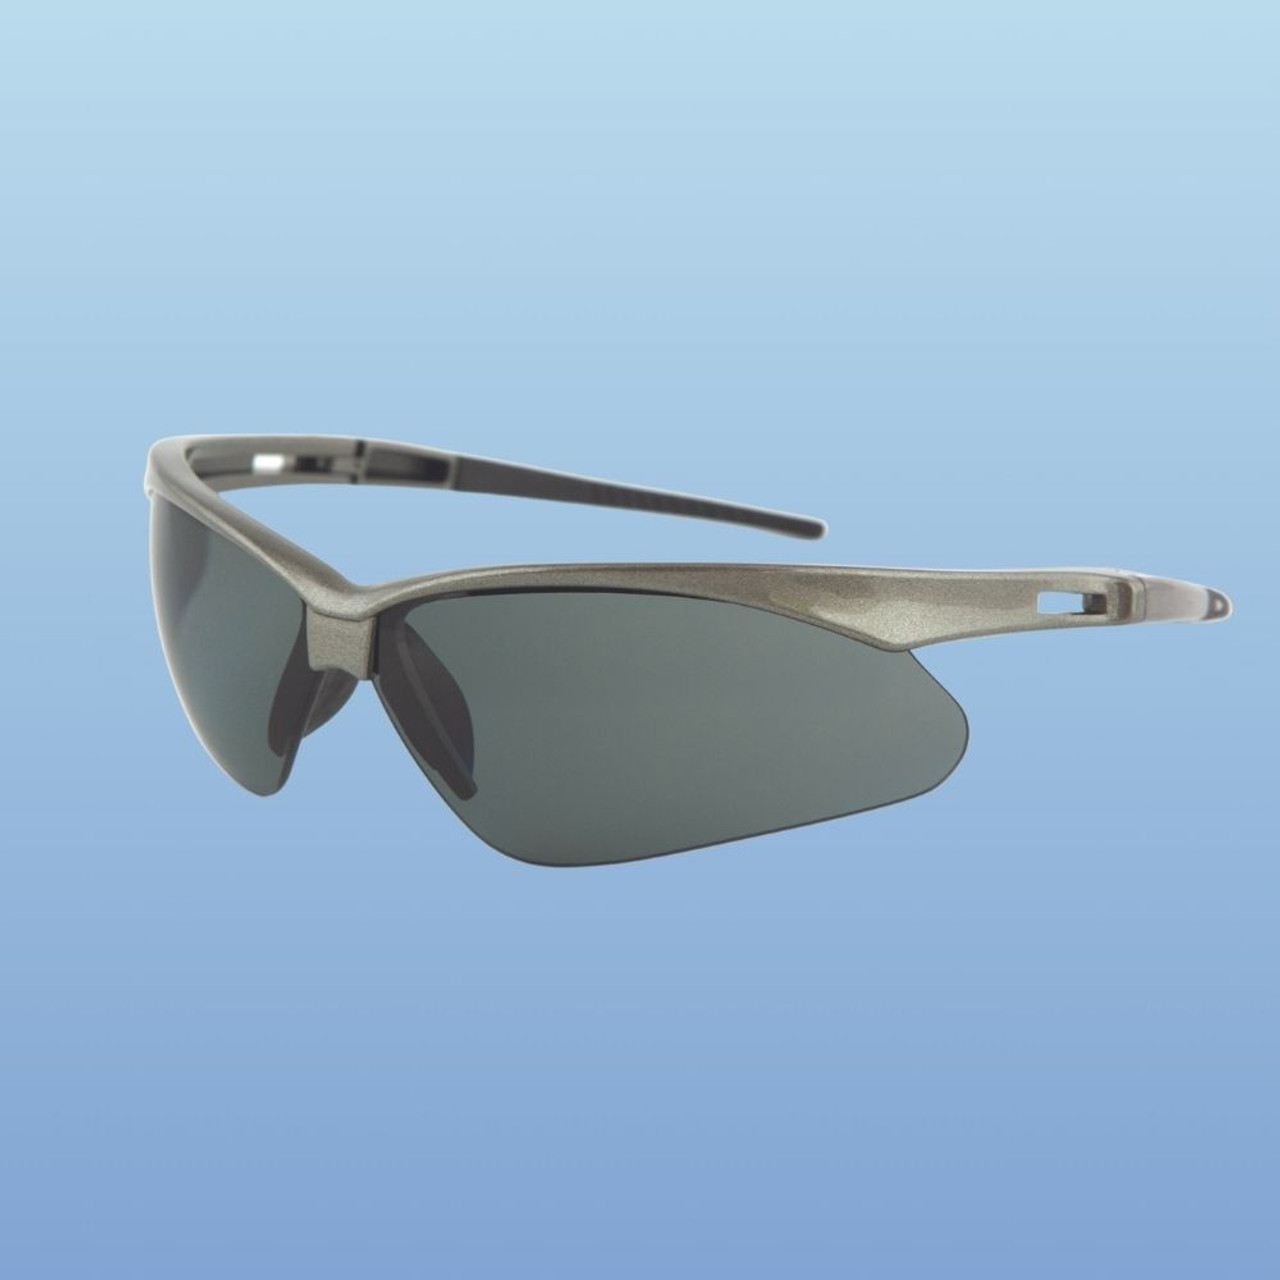 Jackson Safety Safety SG+ Series Safety Glasses, Smoke Polarized/Polycarbonate/Hardcoat Anti-Scratch Lens, Gunmetal